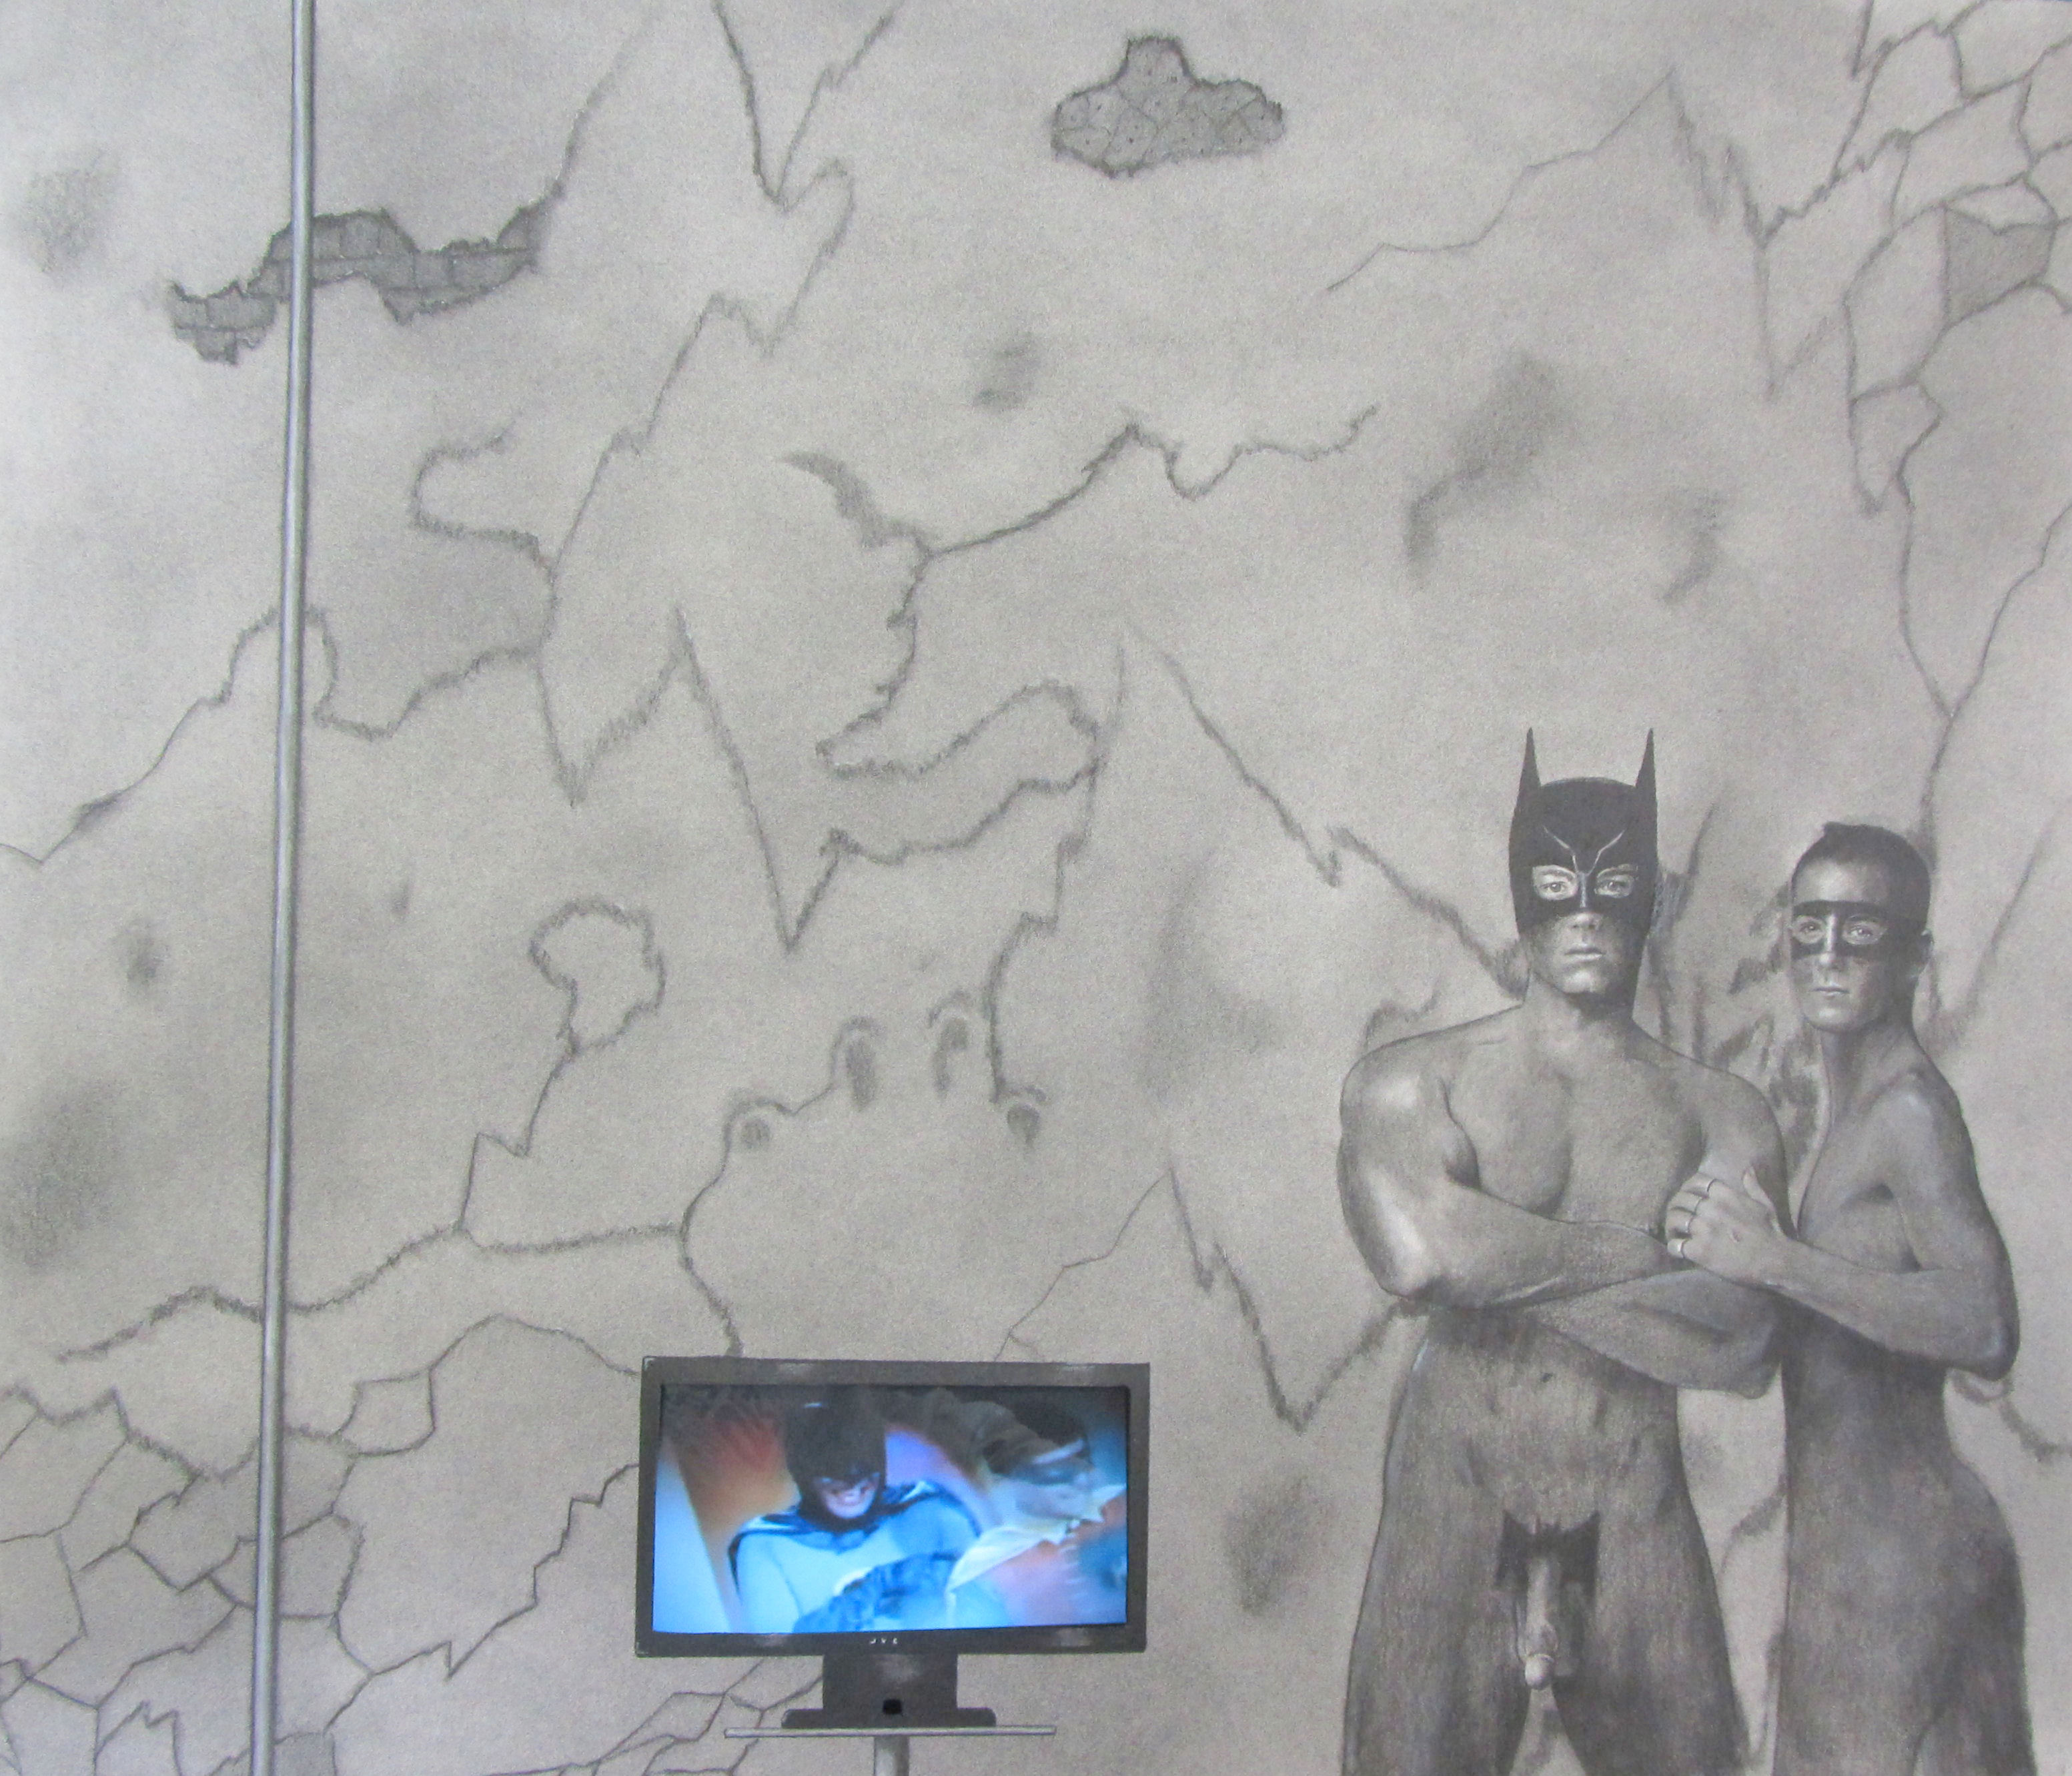 original Batman video drawing by Campello